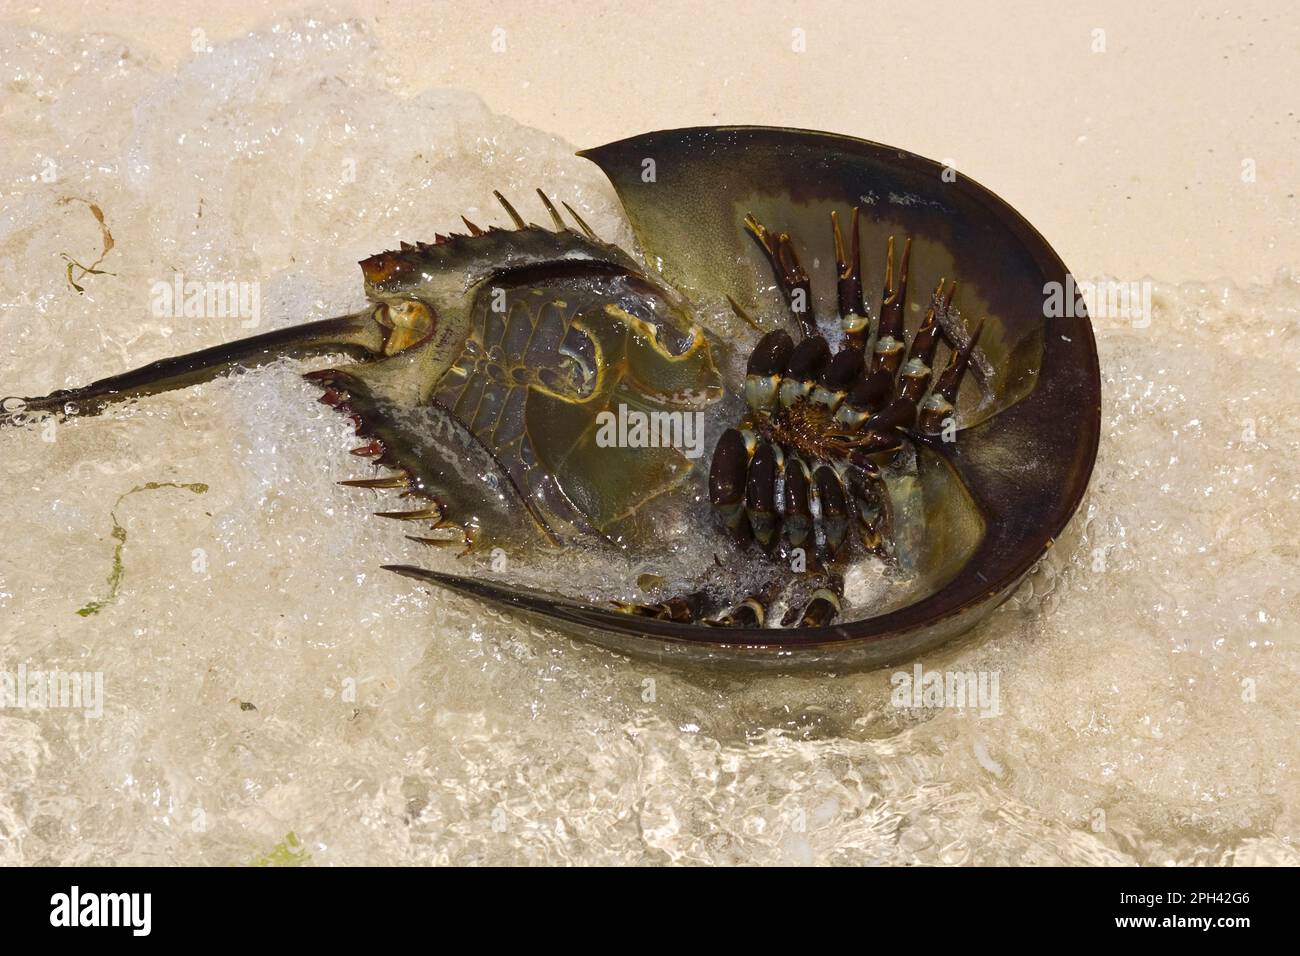 Animals, Other animals, Arrowhead crabs, Mangrove Horseshoe Crab (Carcinoscorpius rotundicauda) adult, upturned on beach, Palawan Island, Philippines Stock Photo